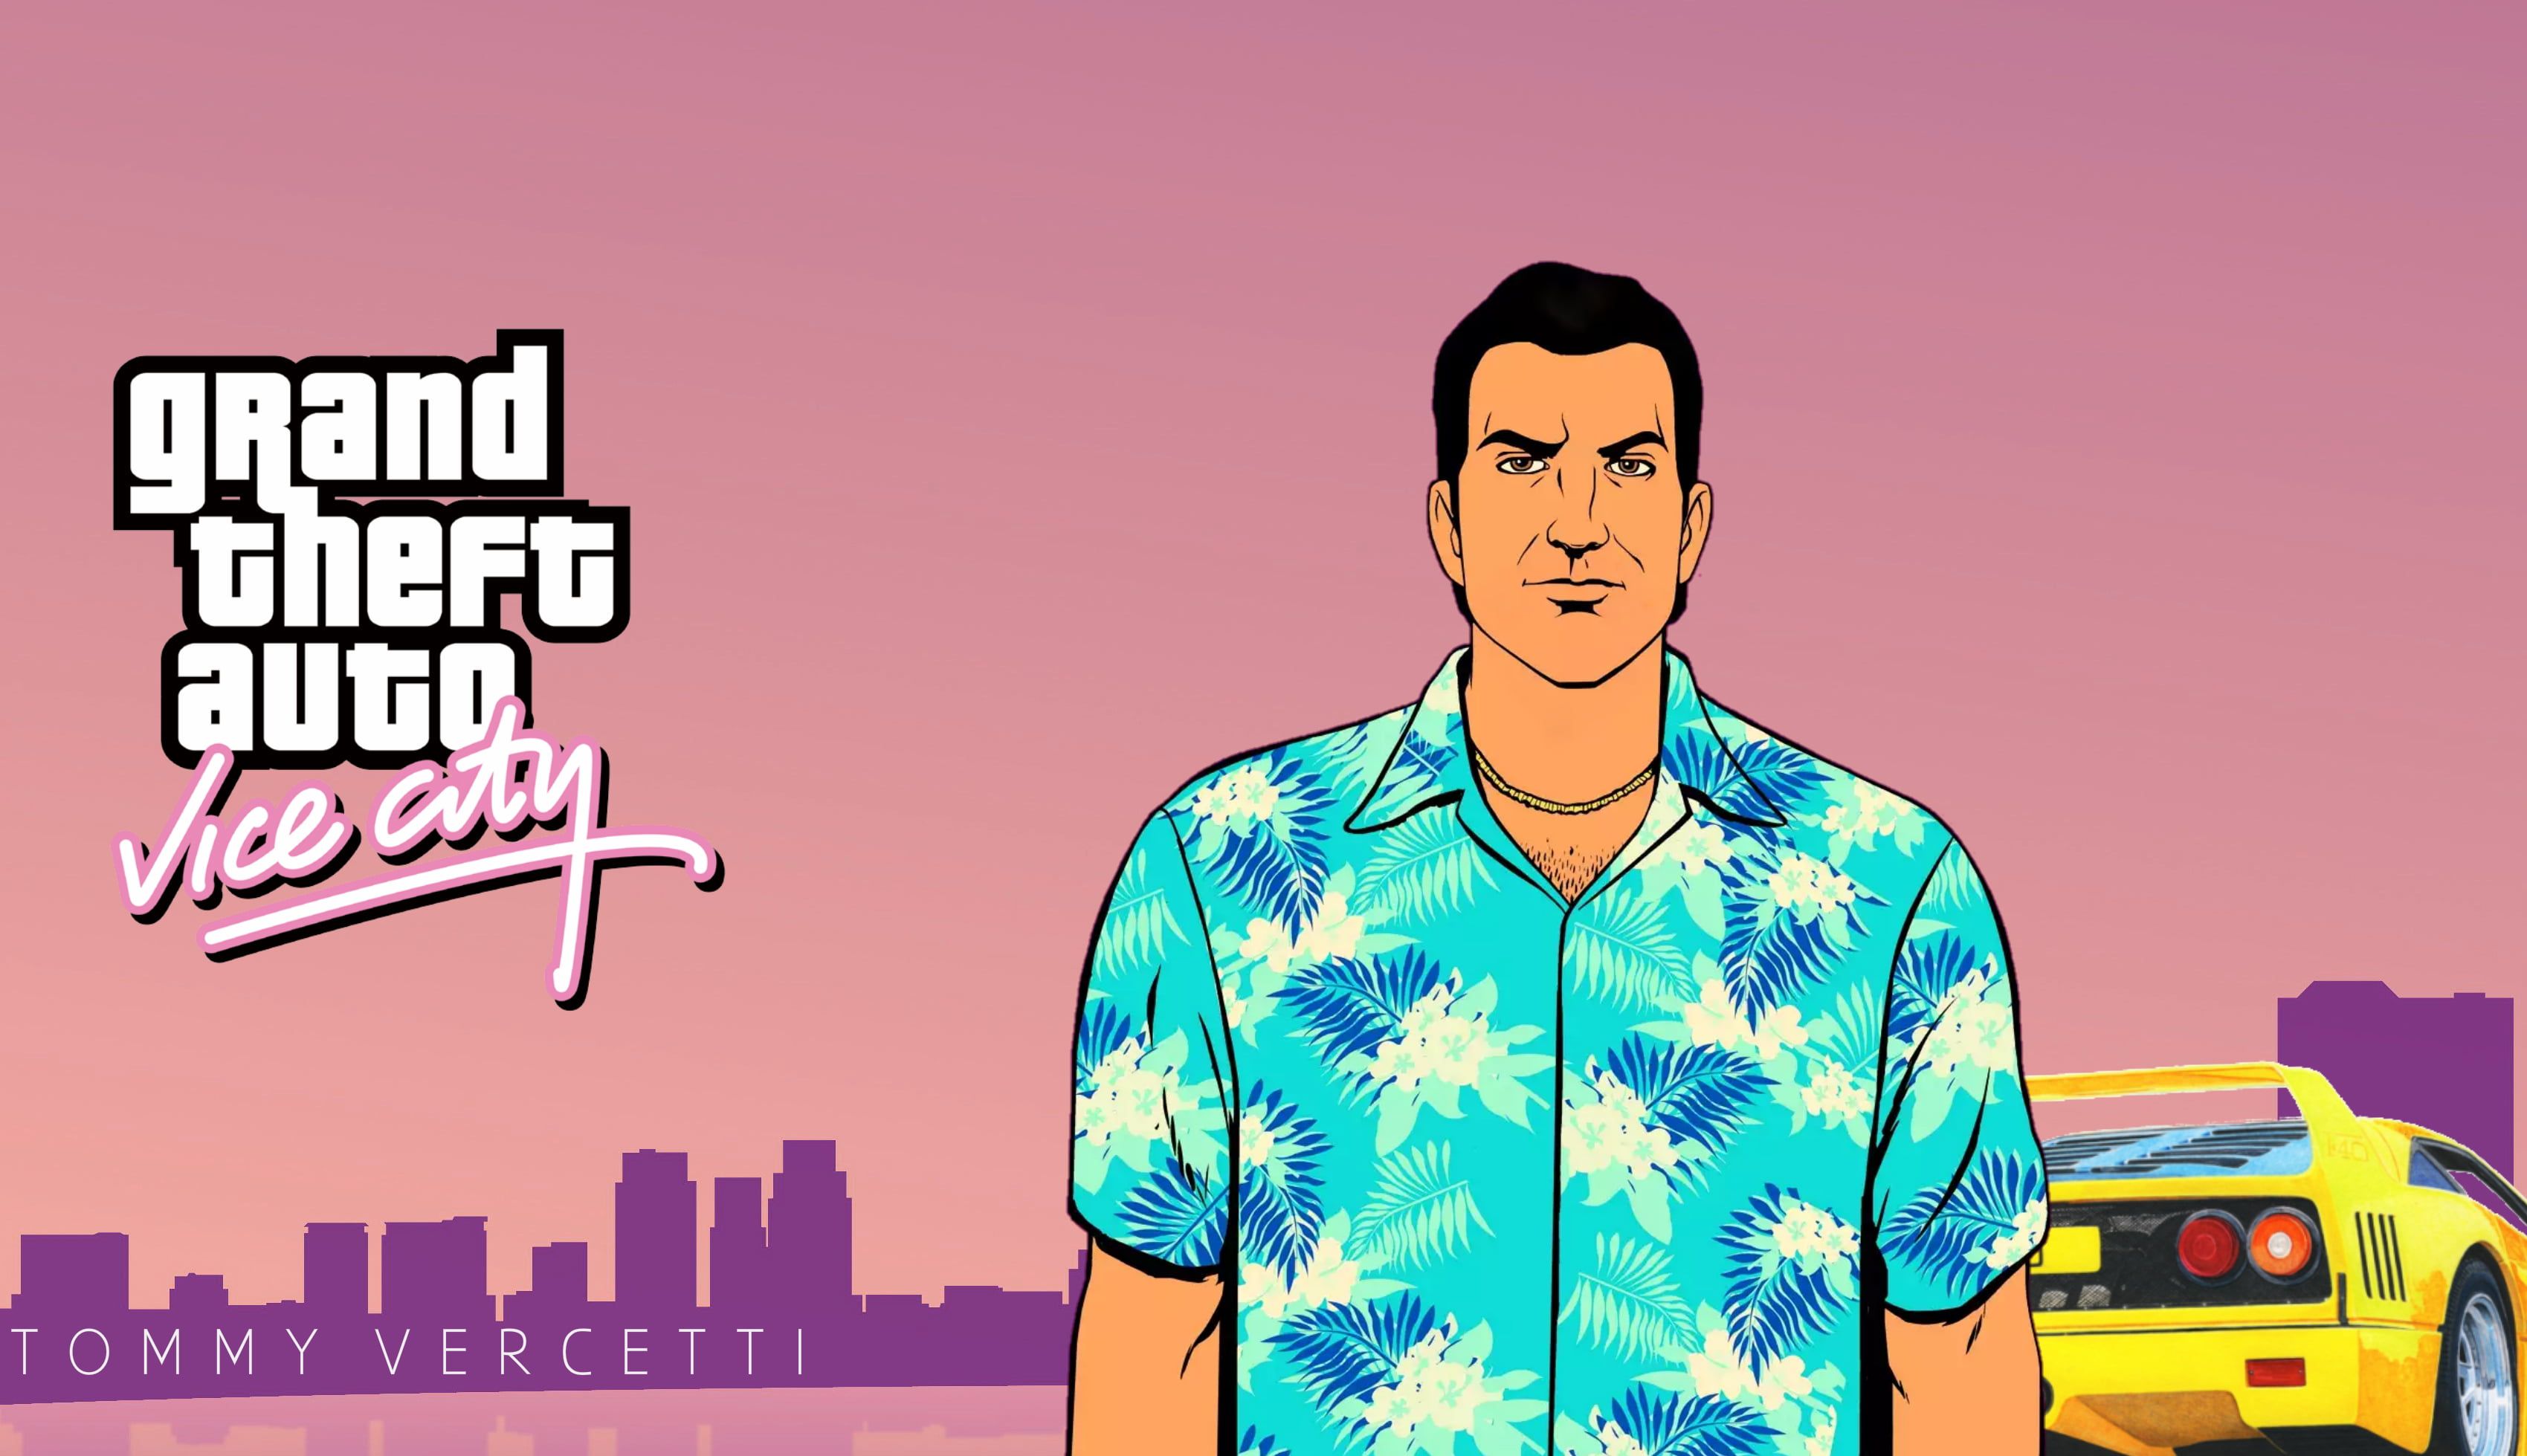 Grand Theft Auto Grand Theft Auto: Vice City Tommy Vercetti K #wallpaper #hdwallpaper #desktop. Gta, Grand theft auto, Grand theft auto series